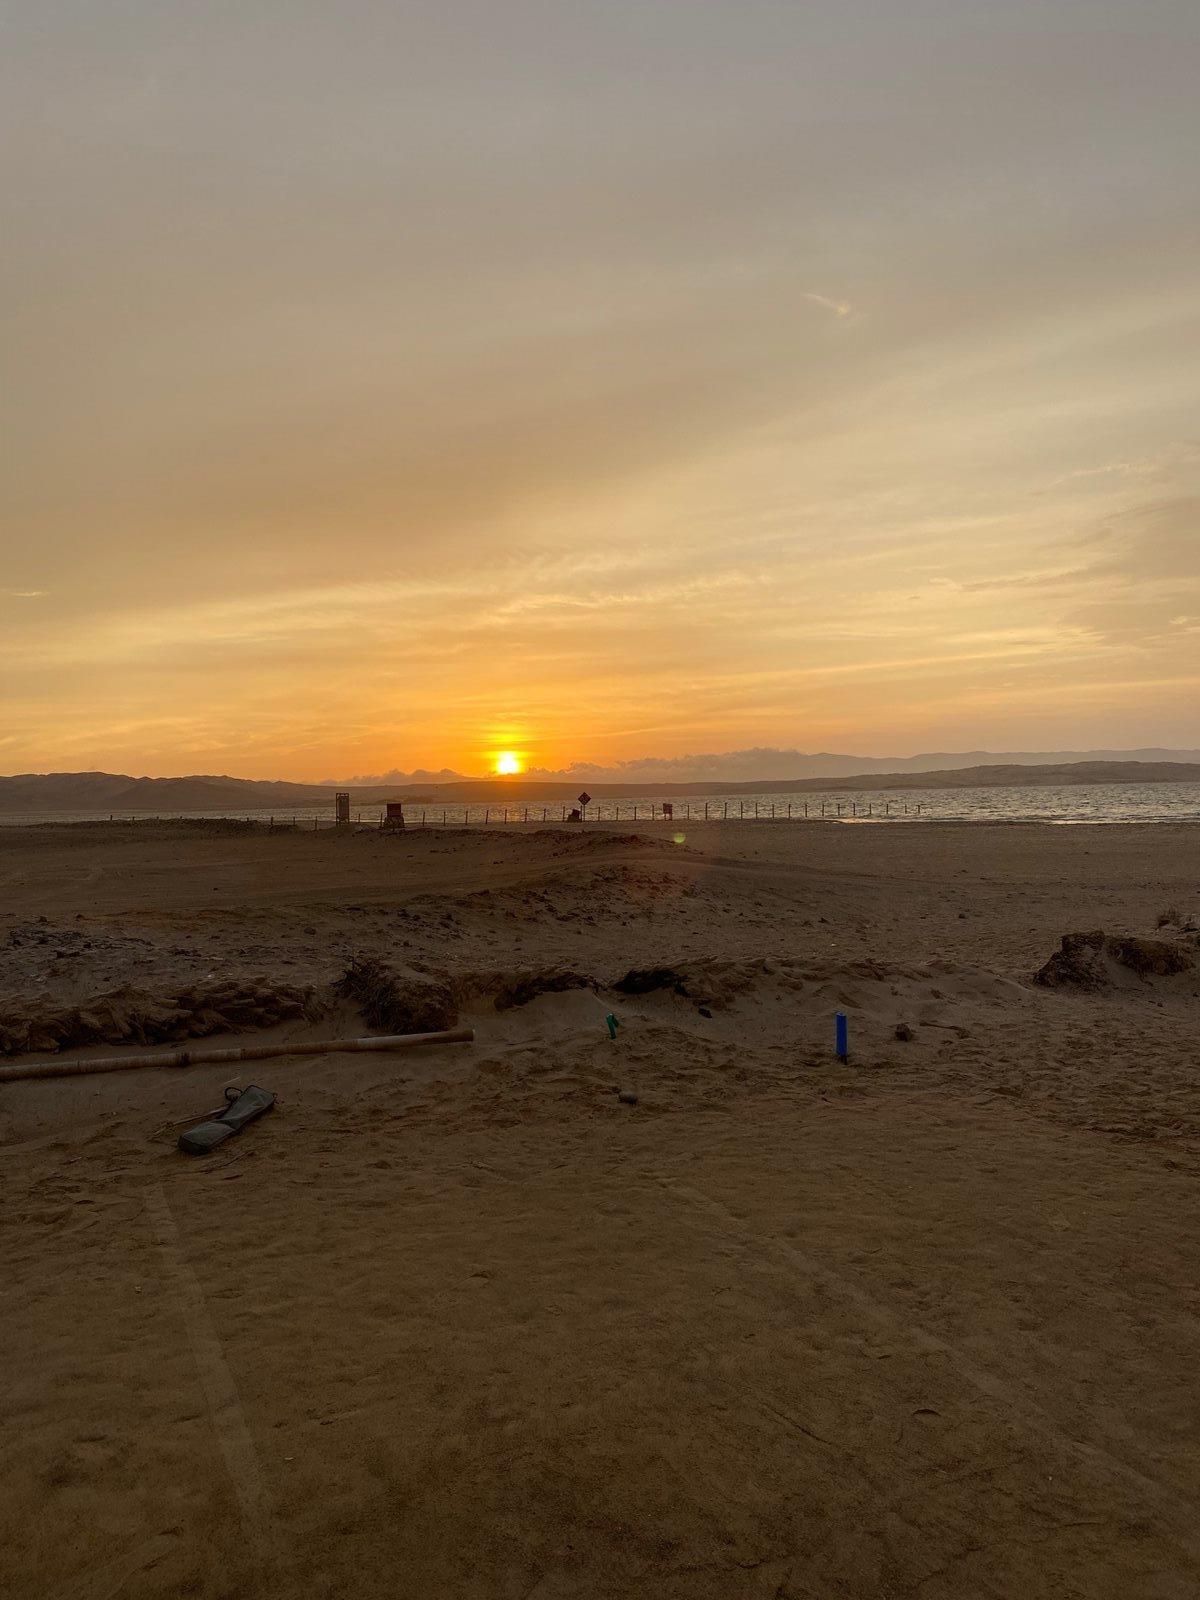 kite spot Peru Paracas south America - kite sunset